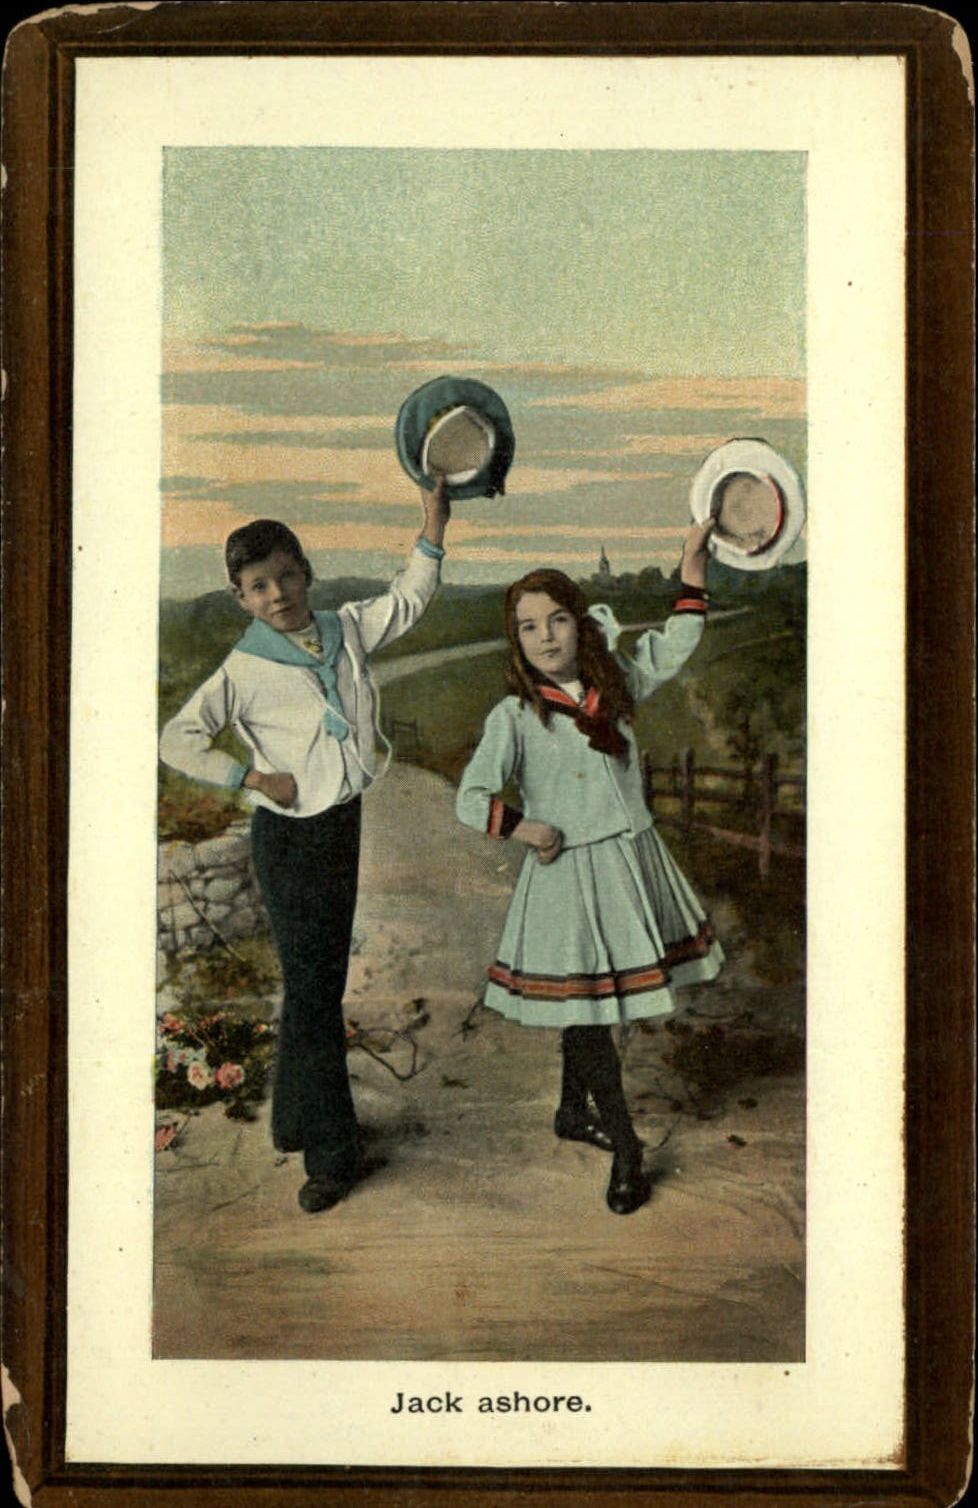 Jack Ashore ~ boy girl sailor outfits dancing ~ Edwardian fashion c1915 postcard